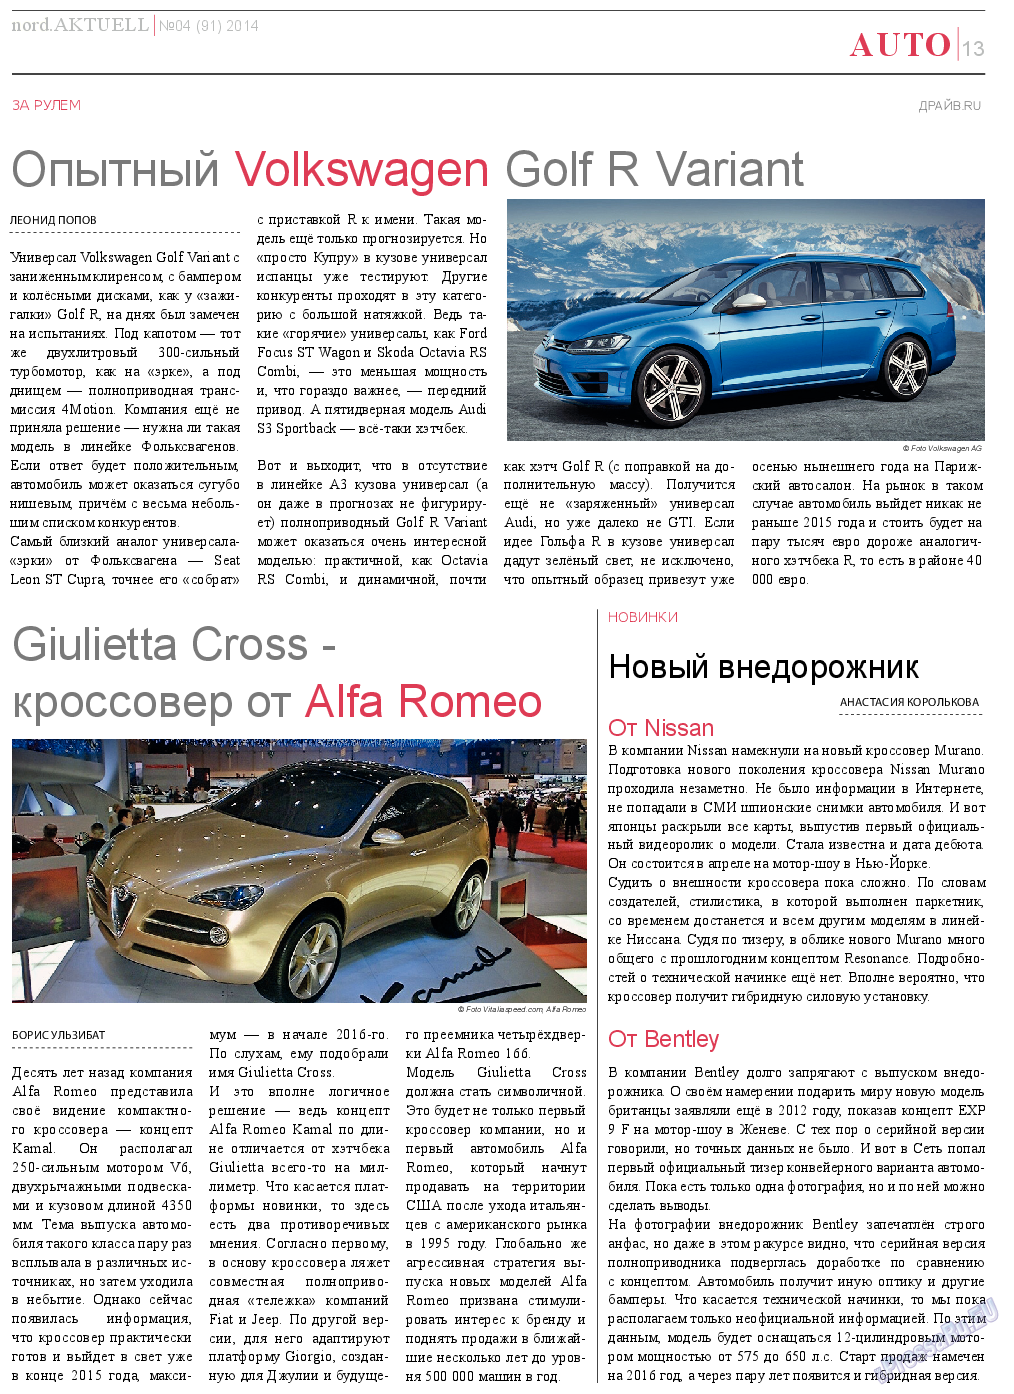 nord.Aktuell, газета. 2014 №4 стр.13